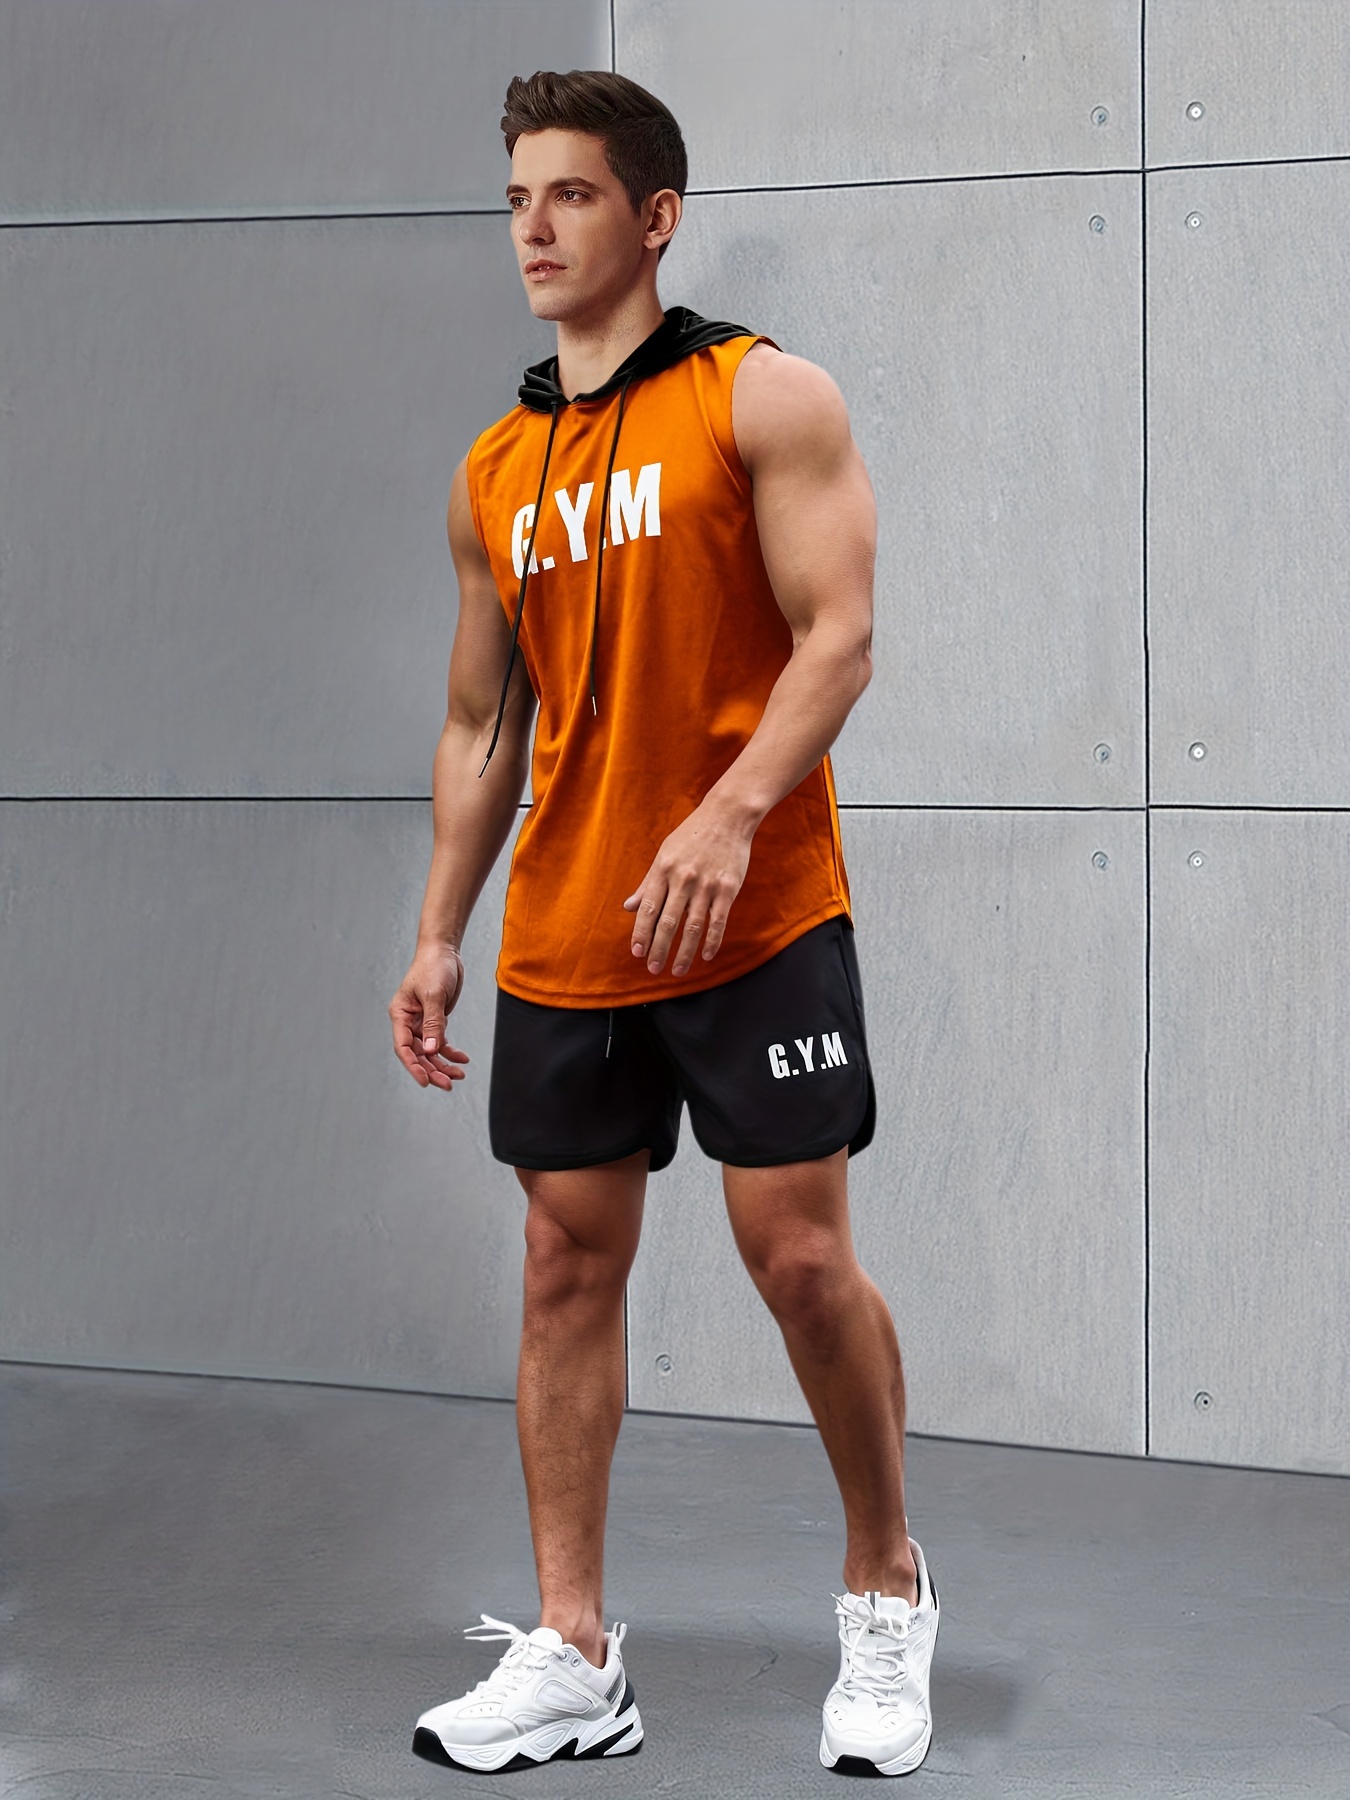 Customized Brand Logo Gym Sleeveless Shirt Mens Bodybuilding Fitness Hooded Tank  Top Men DIY Graphics Printing